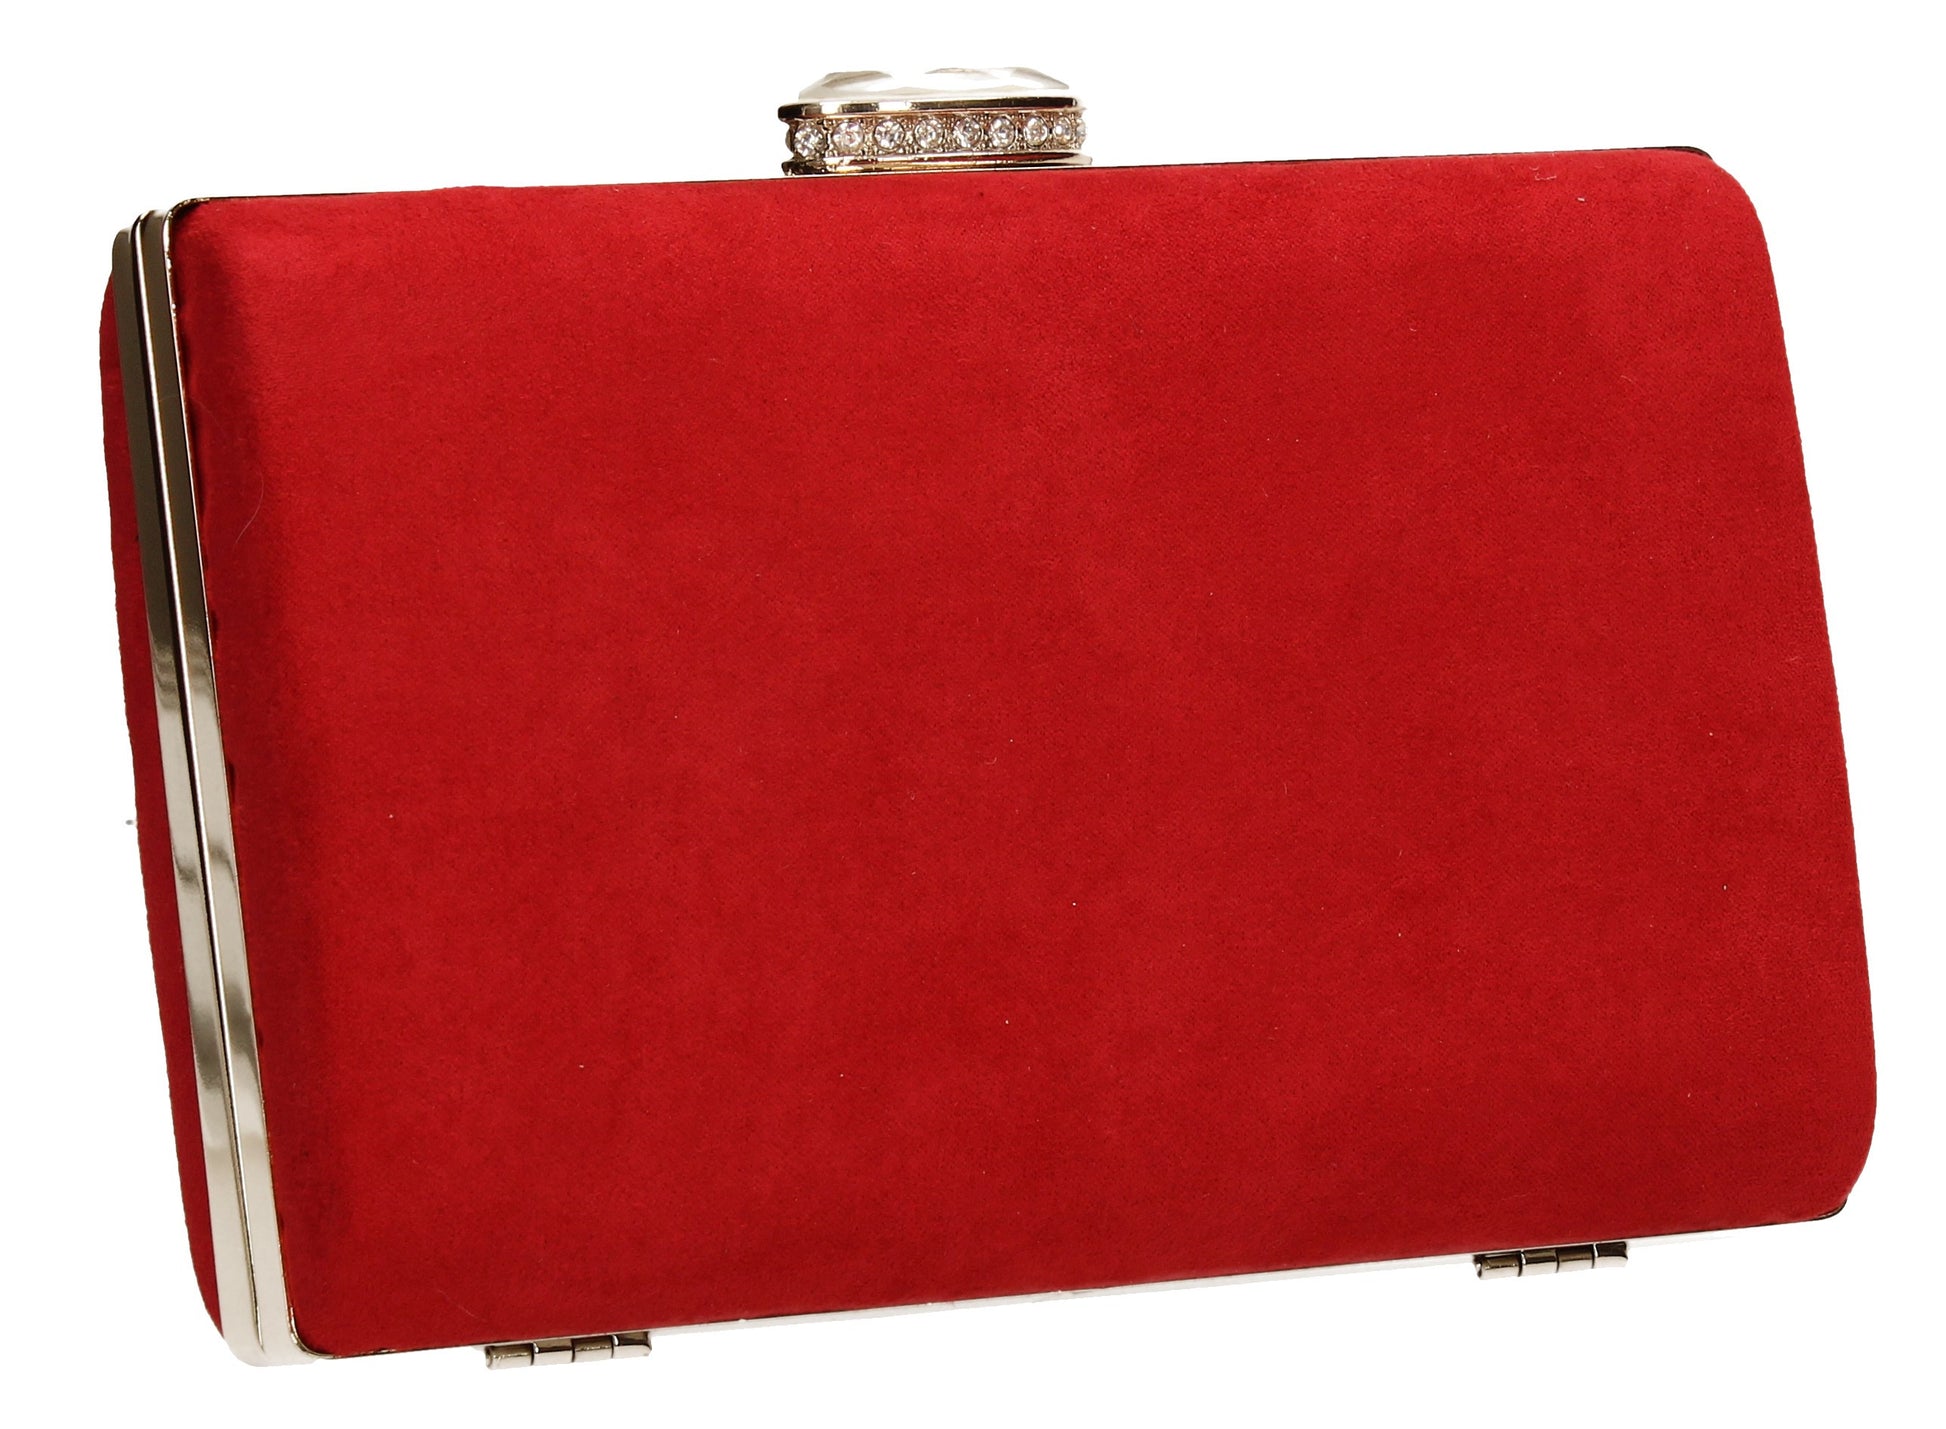 SWANKYSWANS Surrey Clutch Bag Red Cute Cheap Clutch Bag For Weddings School and Work